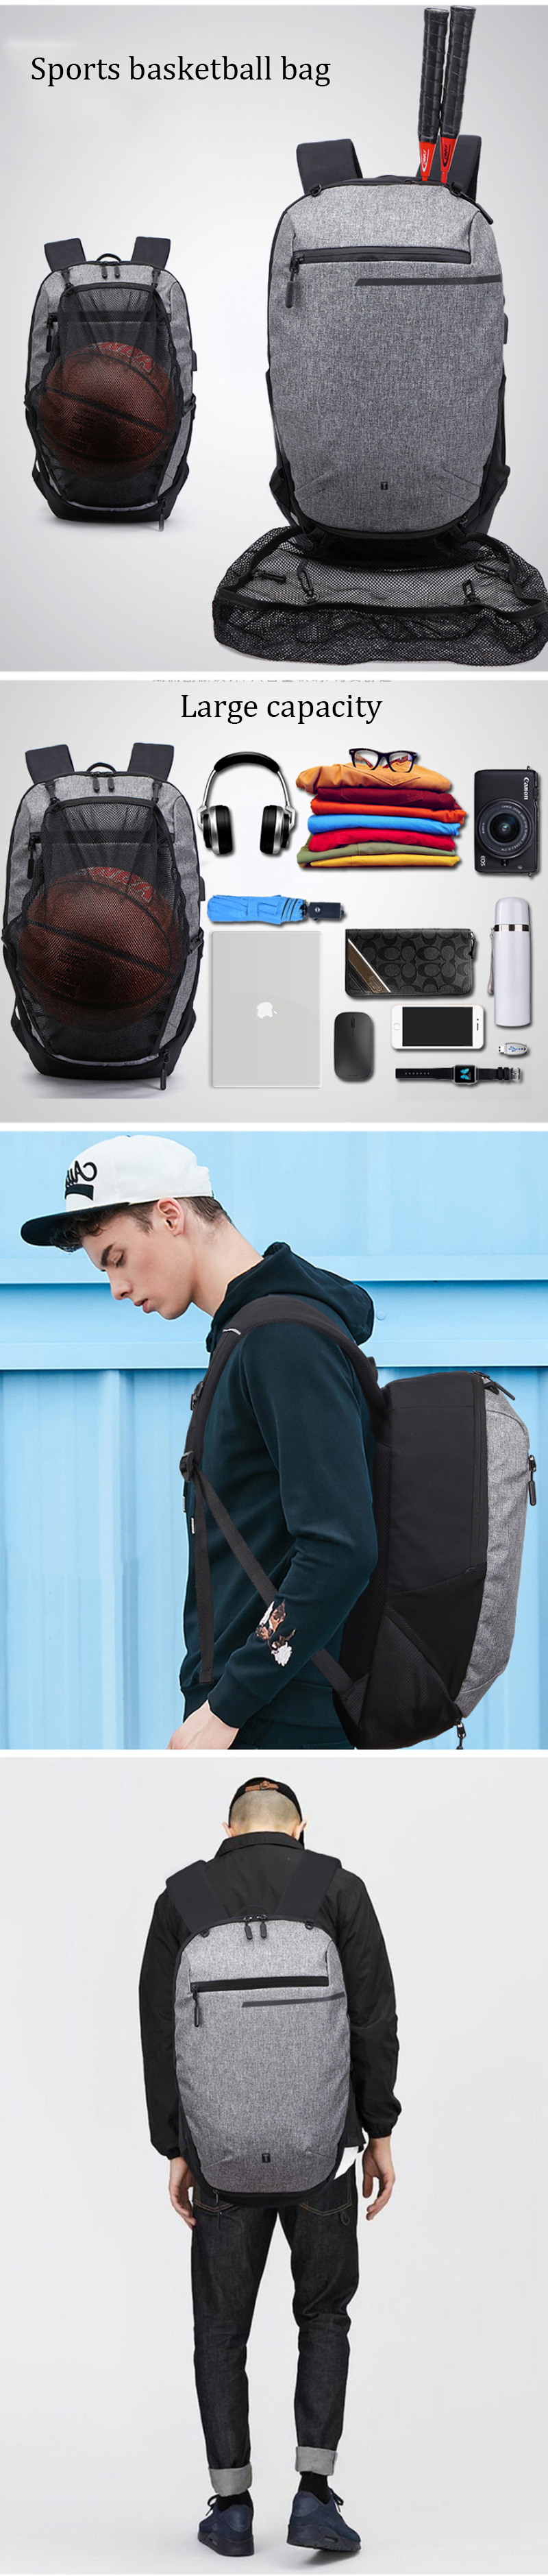 IPReereg-Oxford-USB-Backpack-Travel-Waterproof-Laptop-Bag-School-Bag-Sport-Shoulder-Bag-With-Ball-Ne-1371932-2